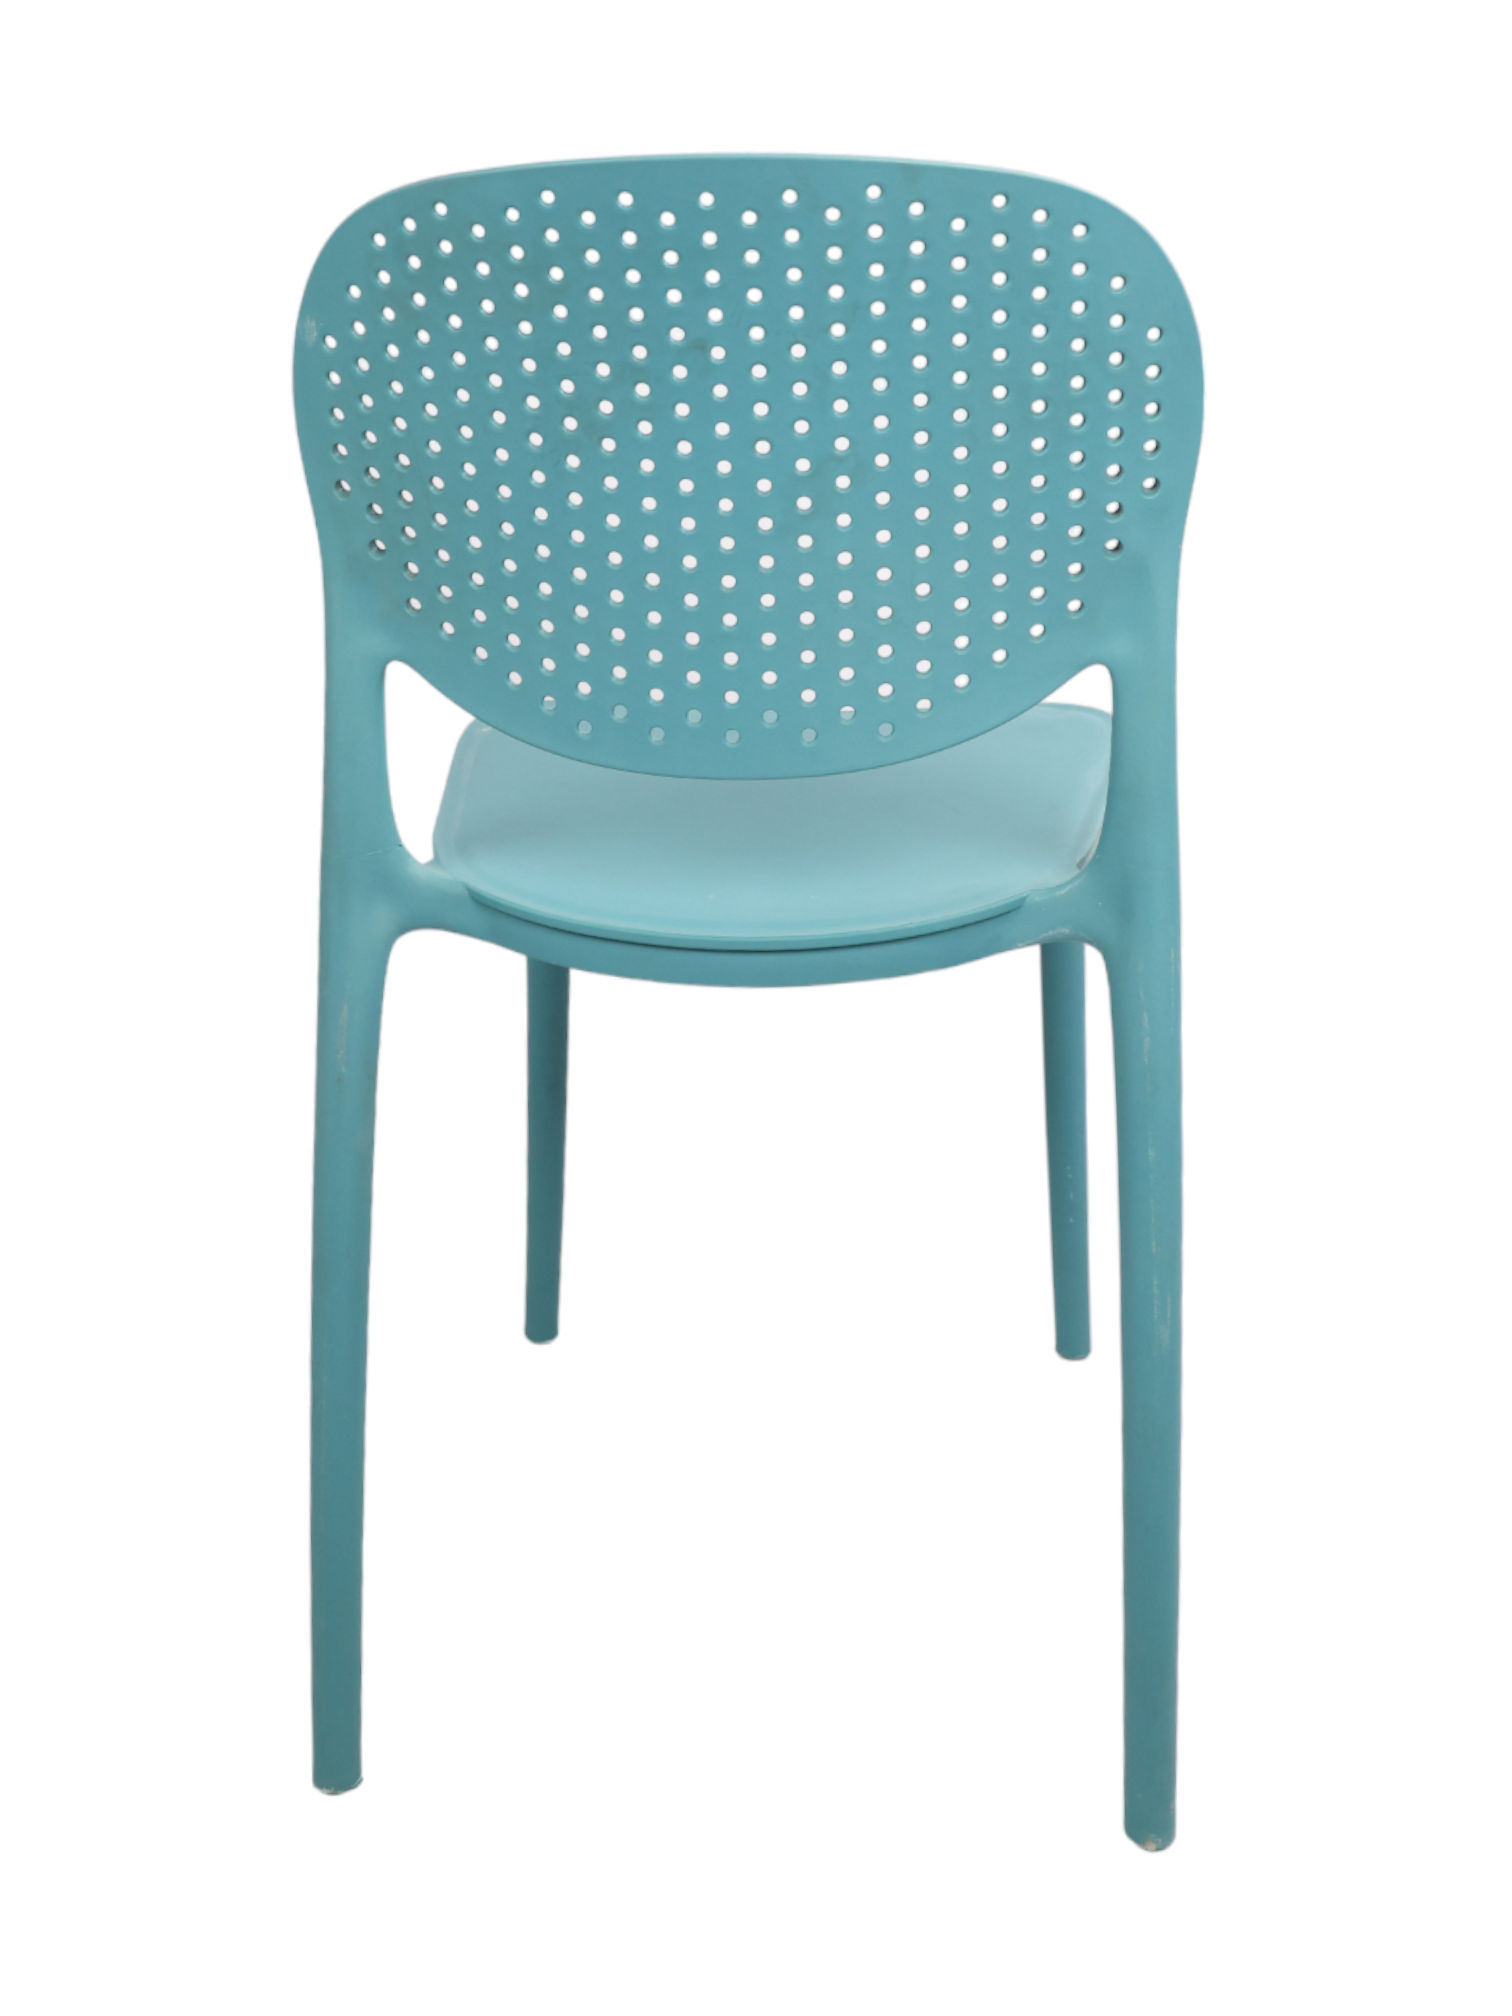 Adhunika Cafe Furniture Chair Plastic Low Back-Light Blue